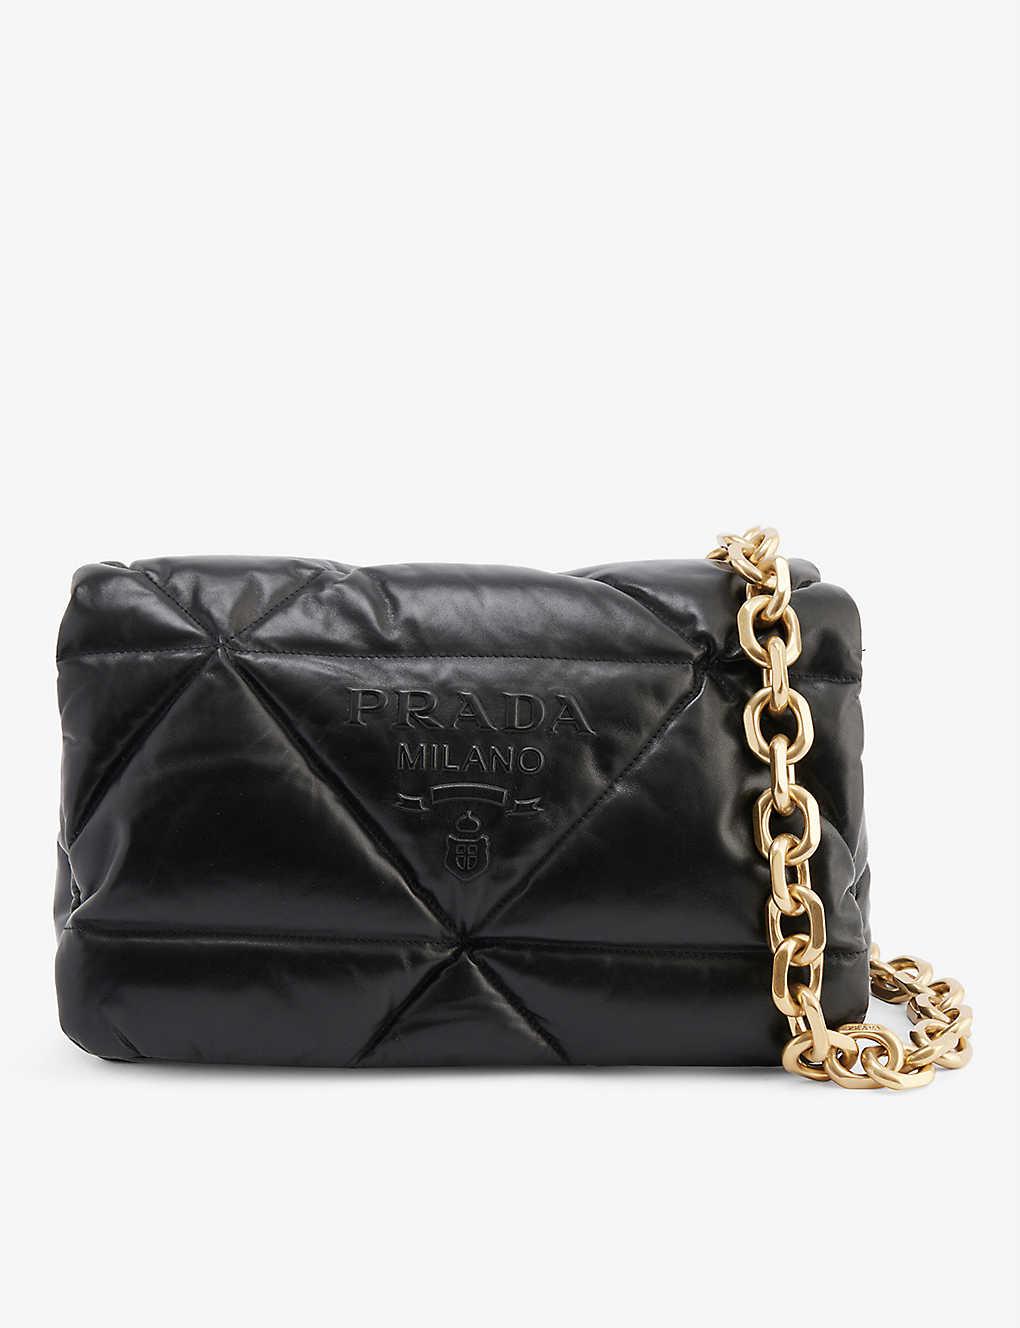 Prada Quilted Leather Shoulder Bag in Black | Lyst